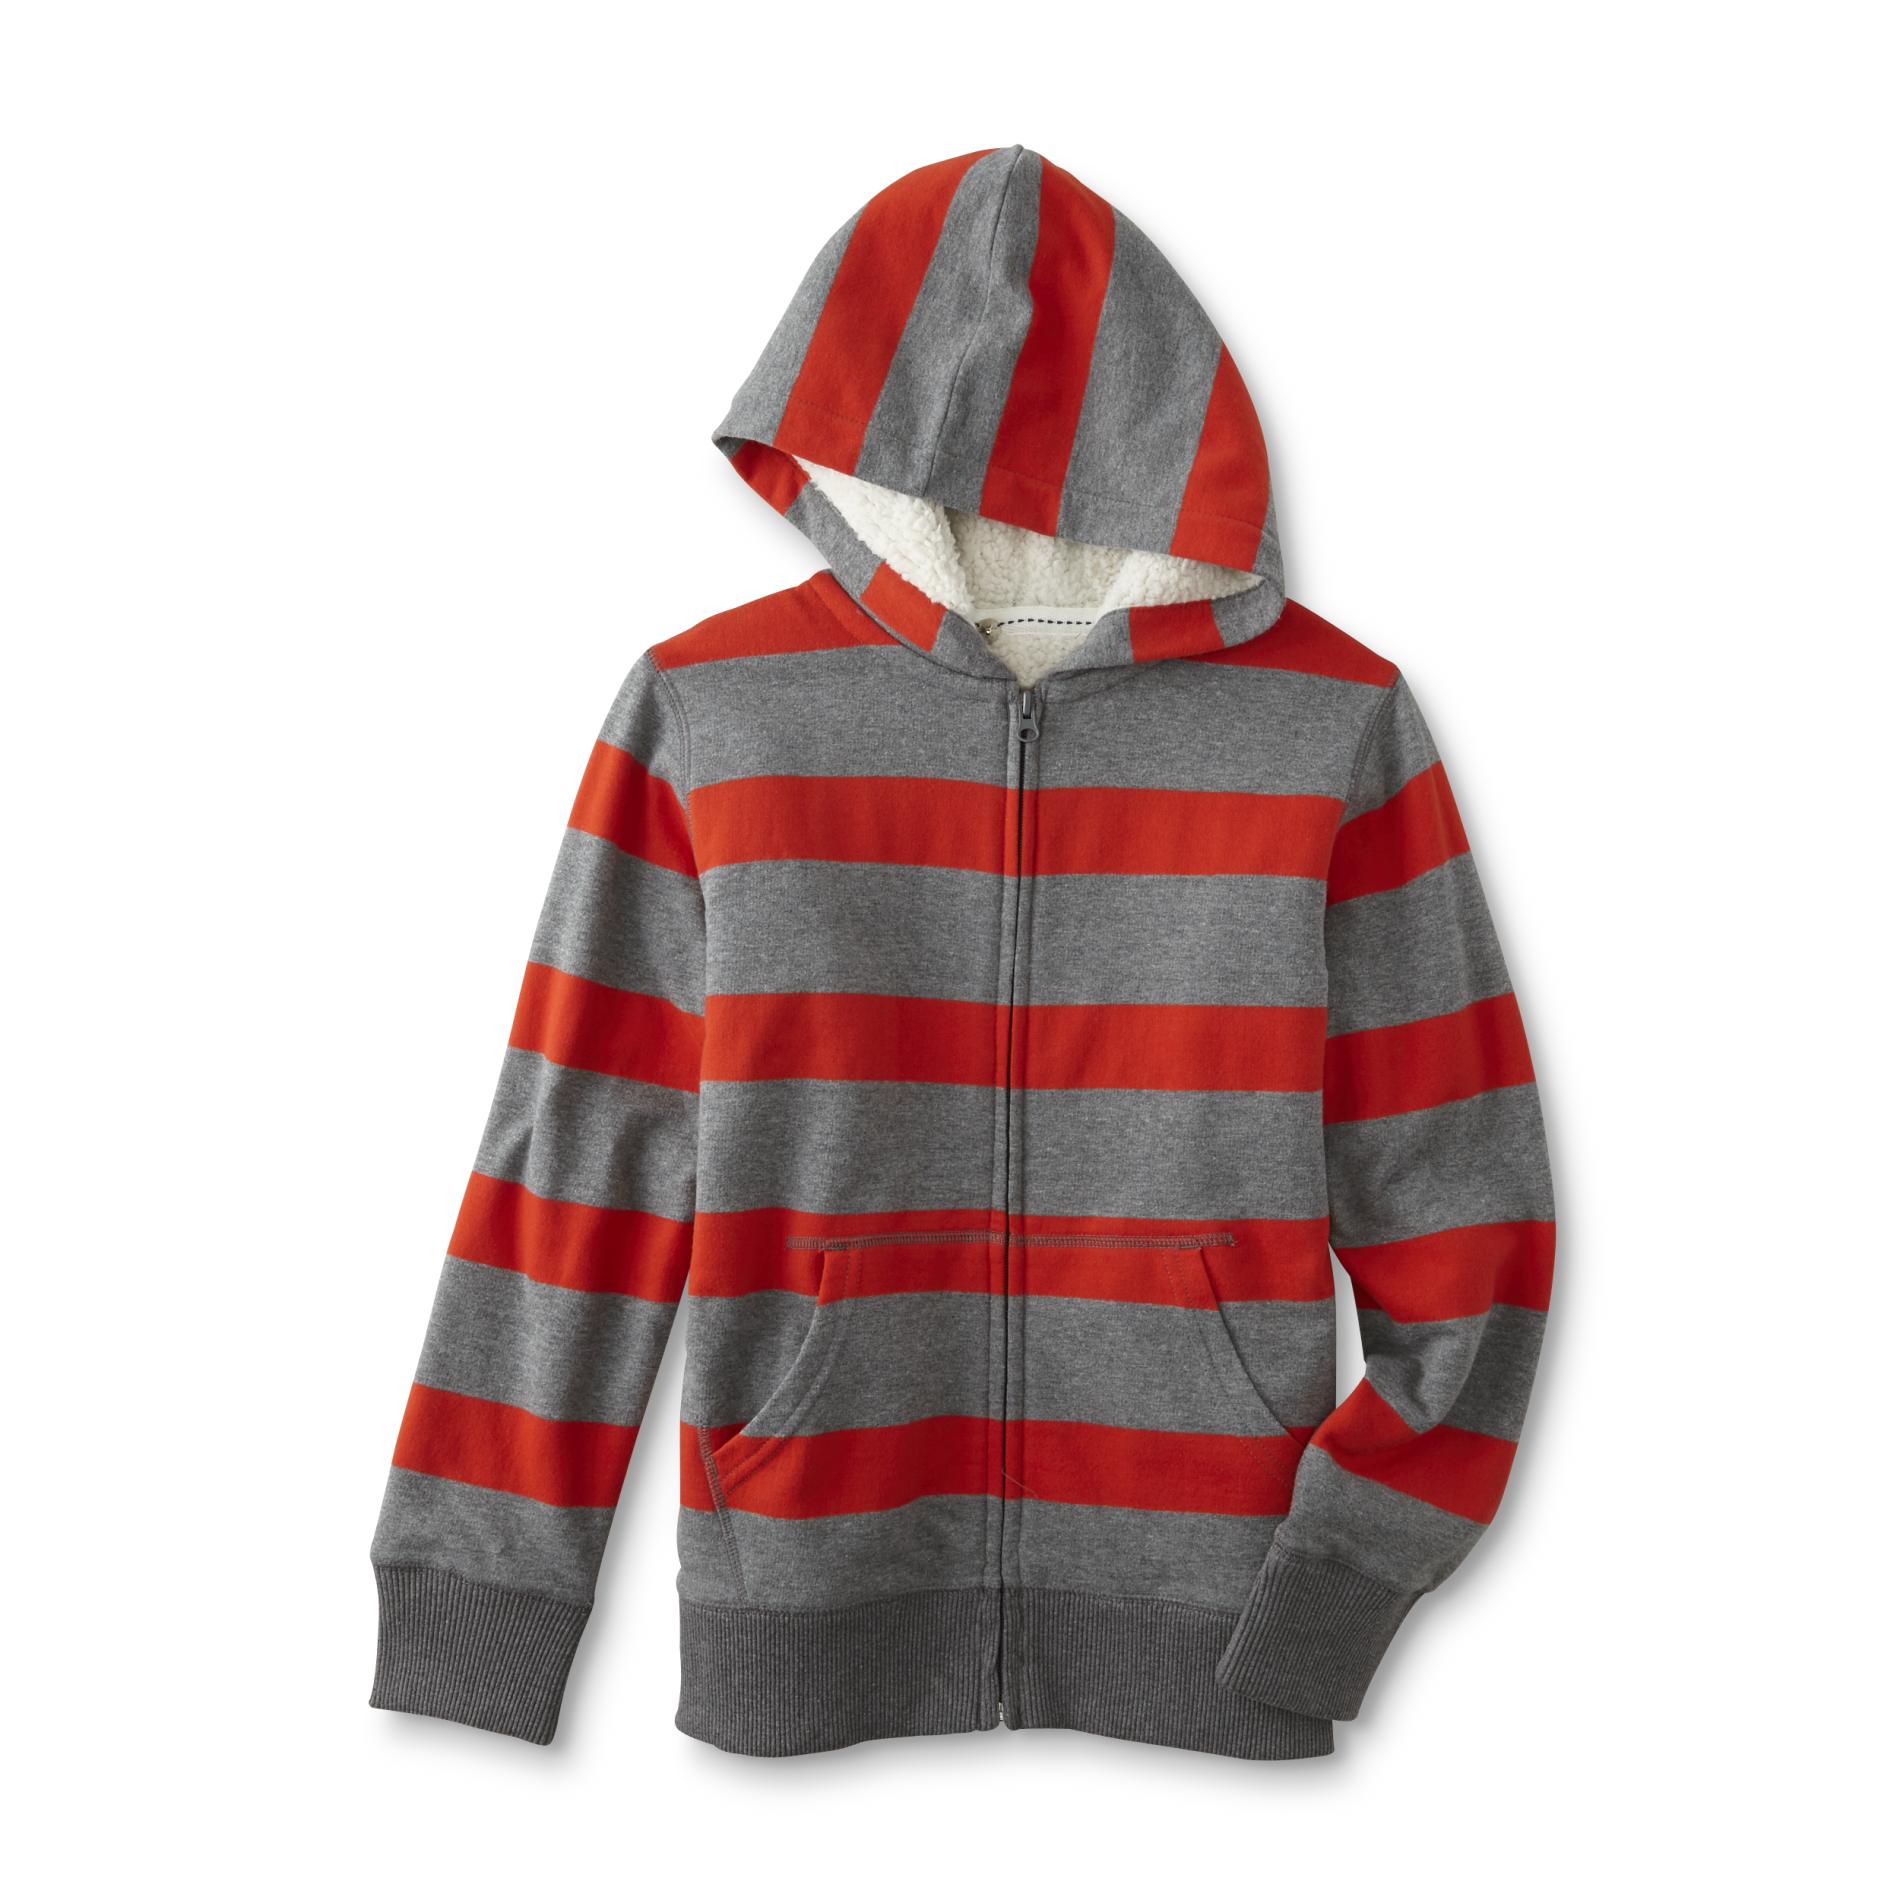 Roebuck & Co. Boy's Hoodie Jacket - Striped